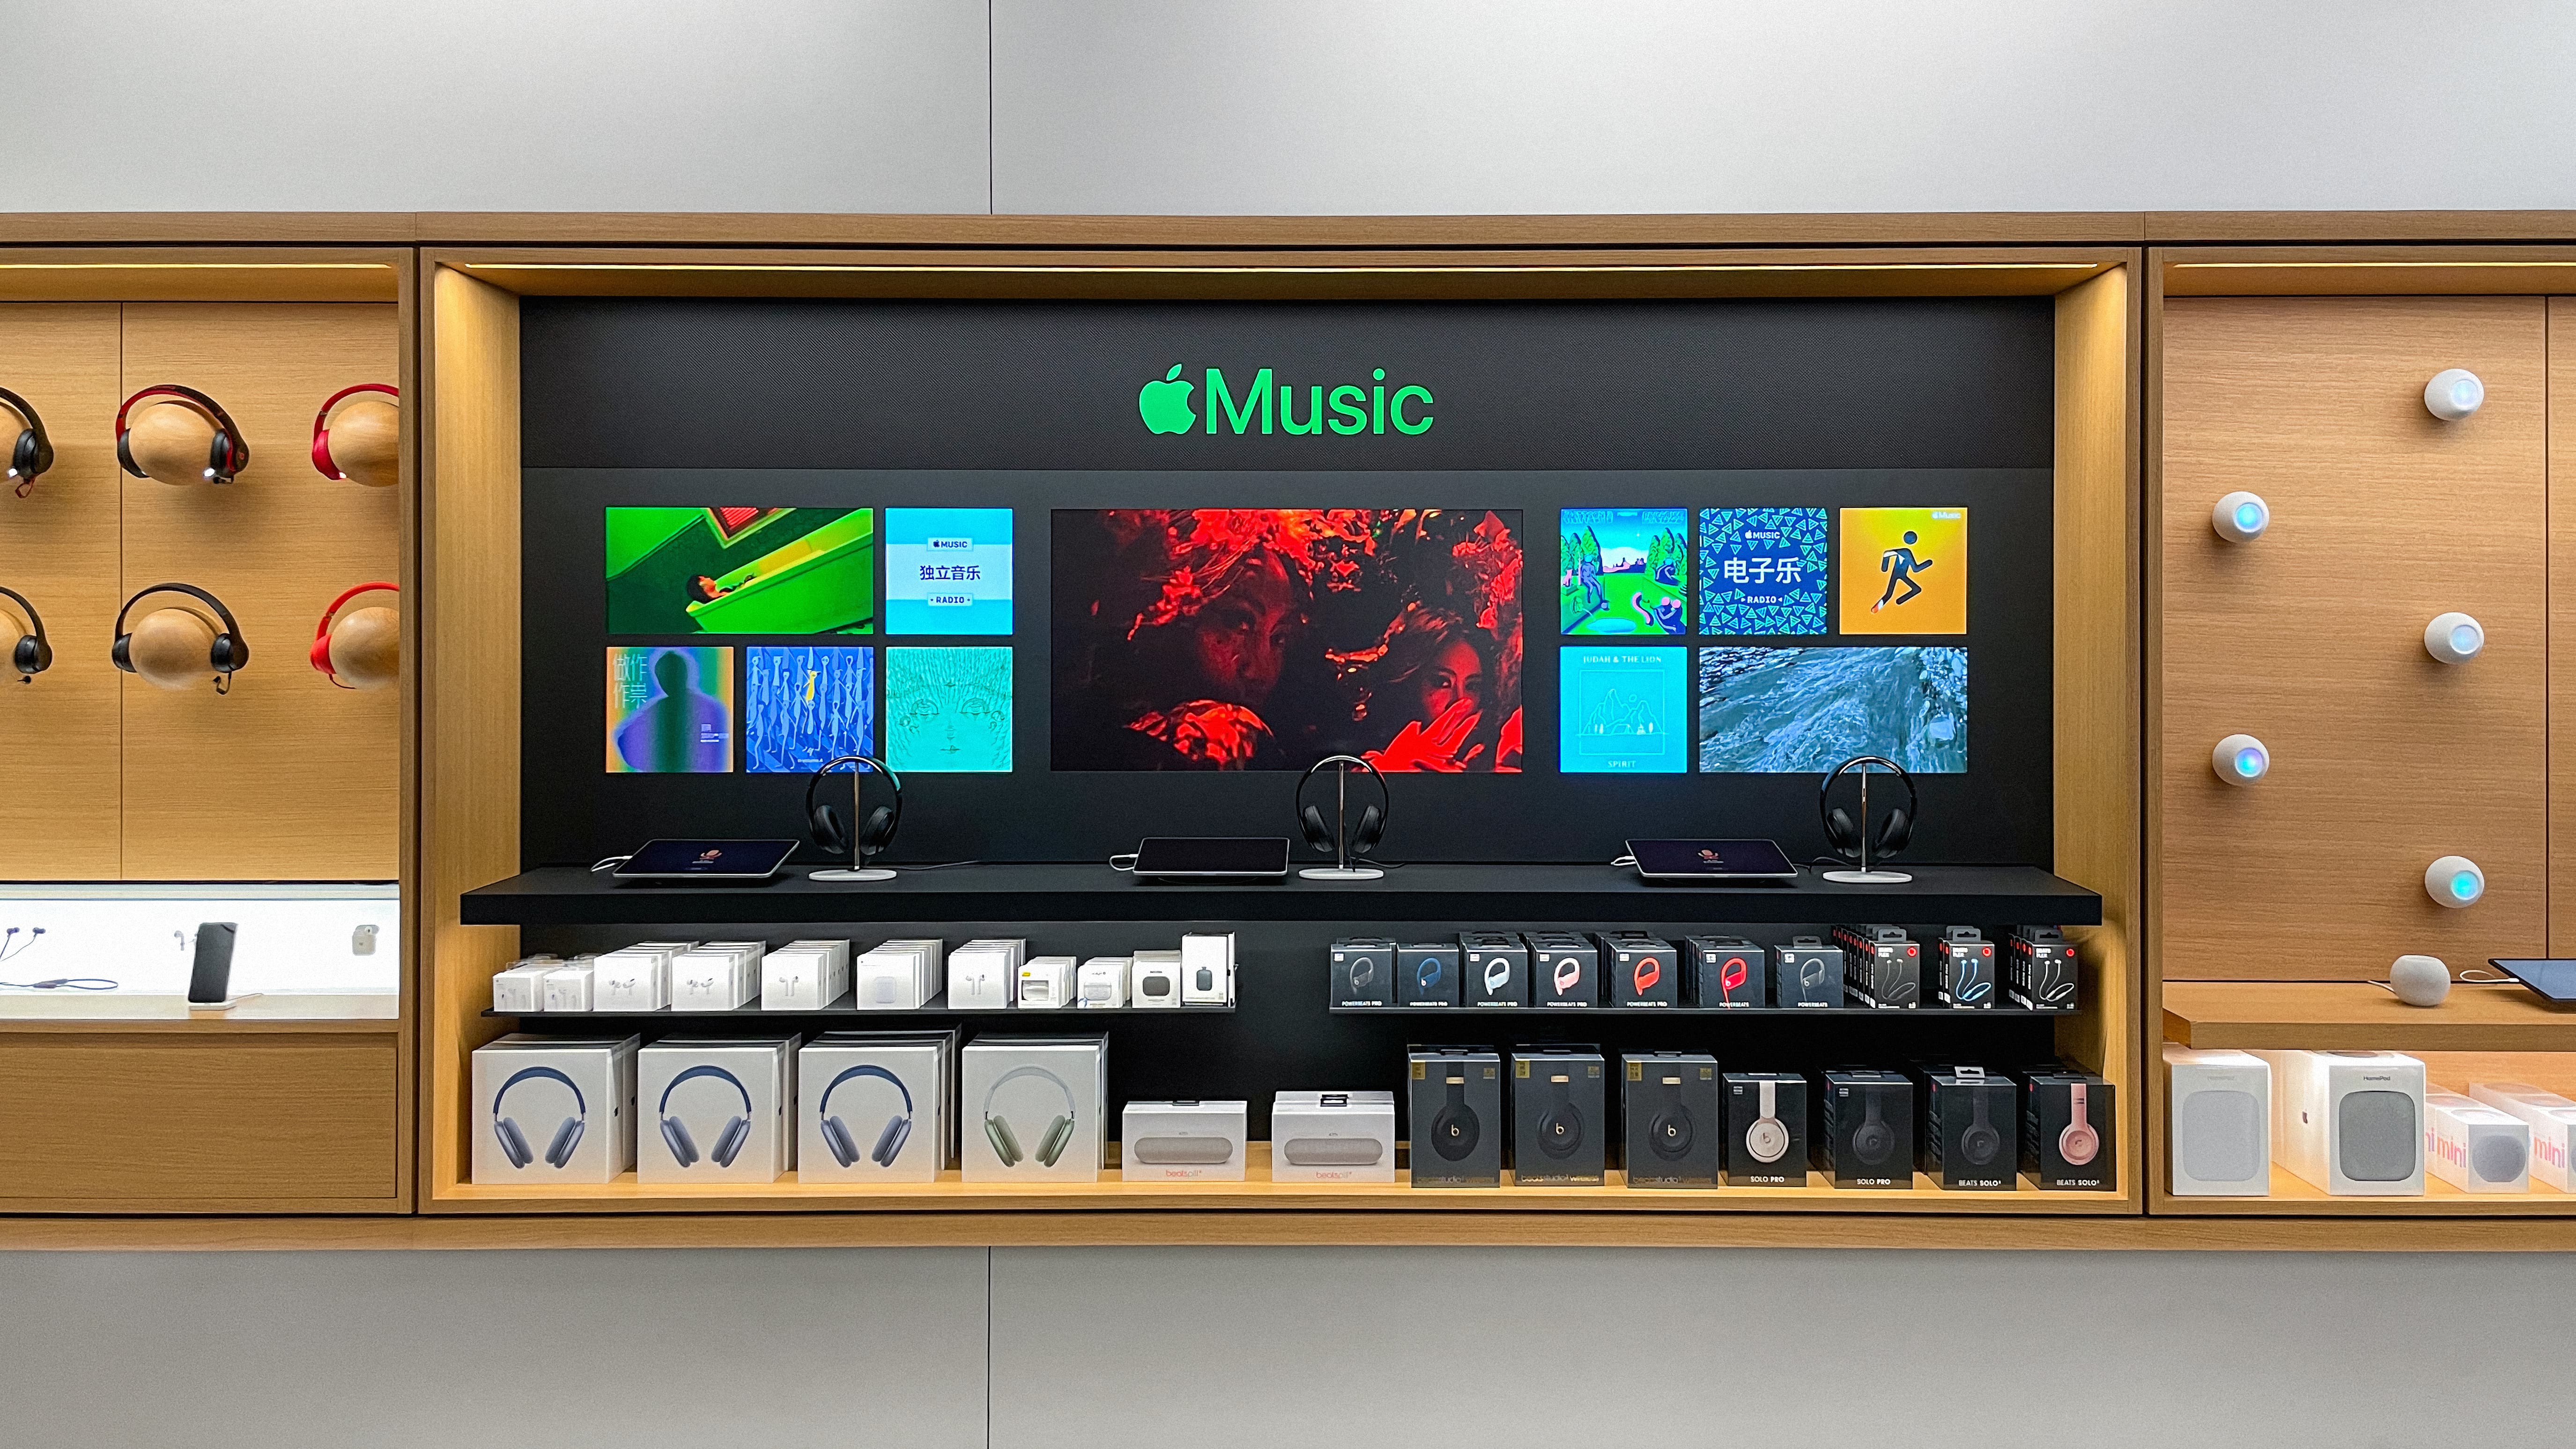 Apple Store displays bring Apple Music 